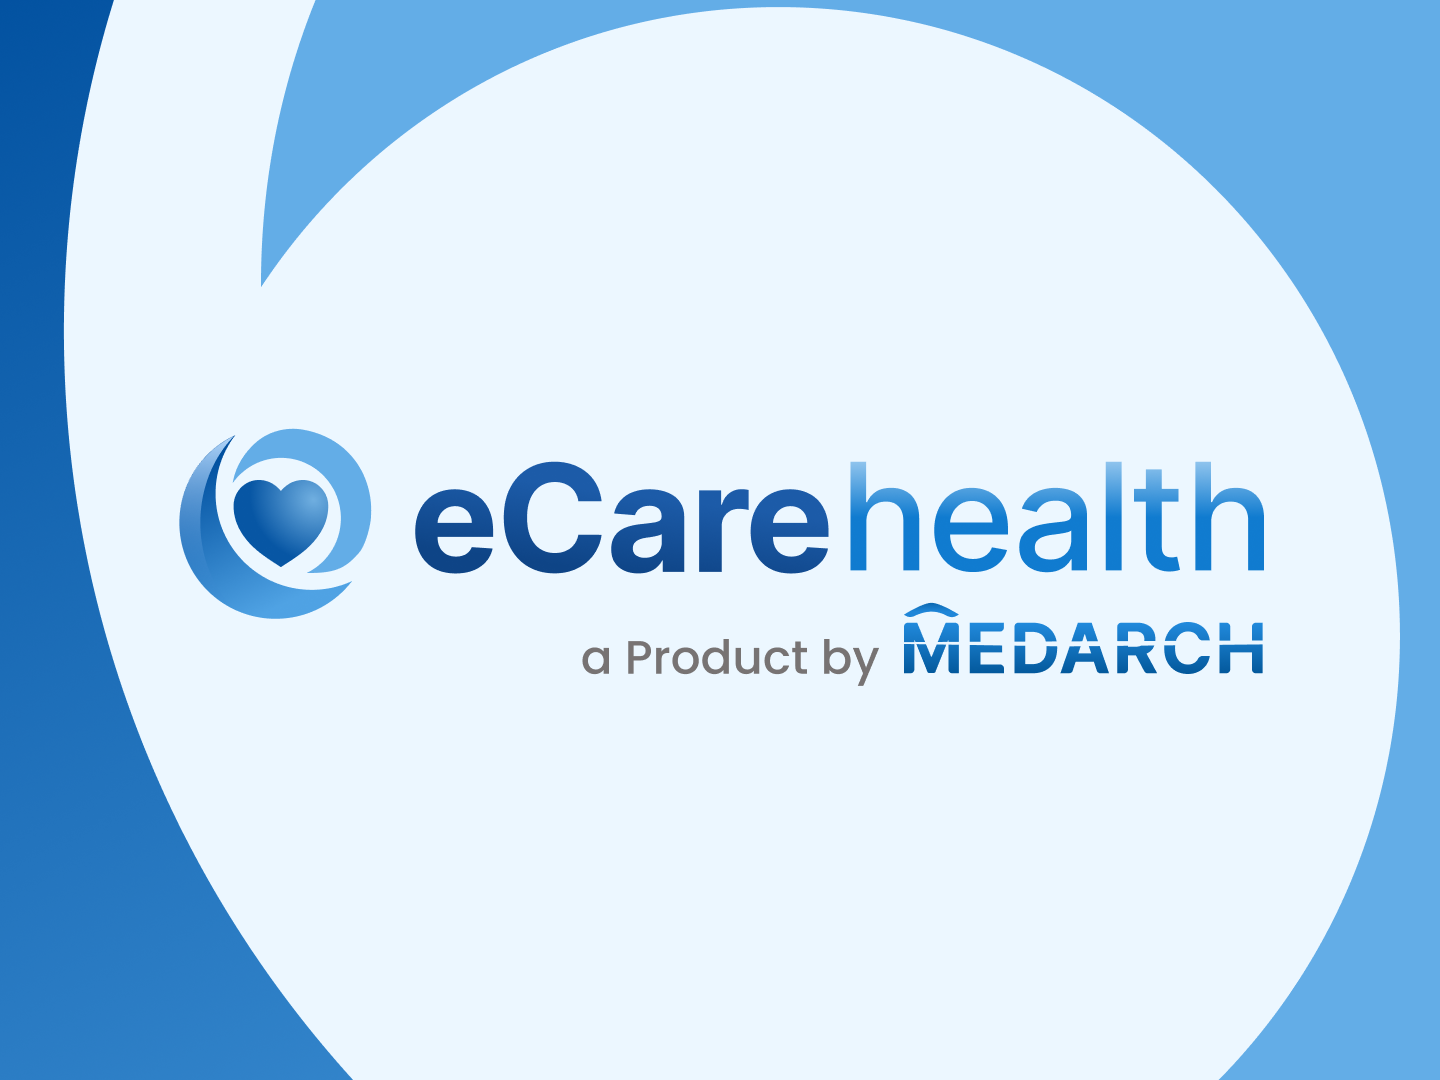 eCare health Logo by Pruthviraj Mane on Dribbble